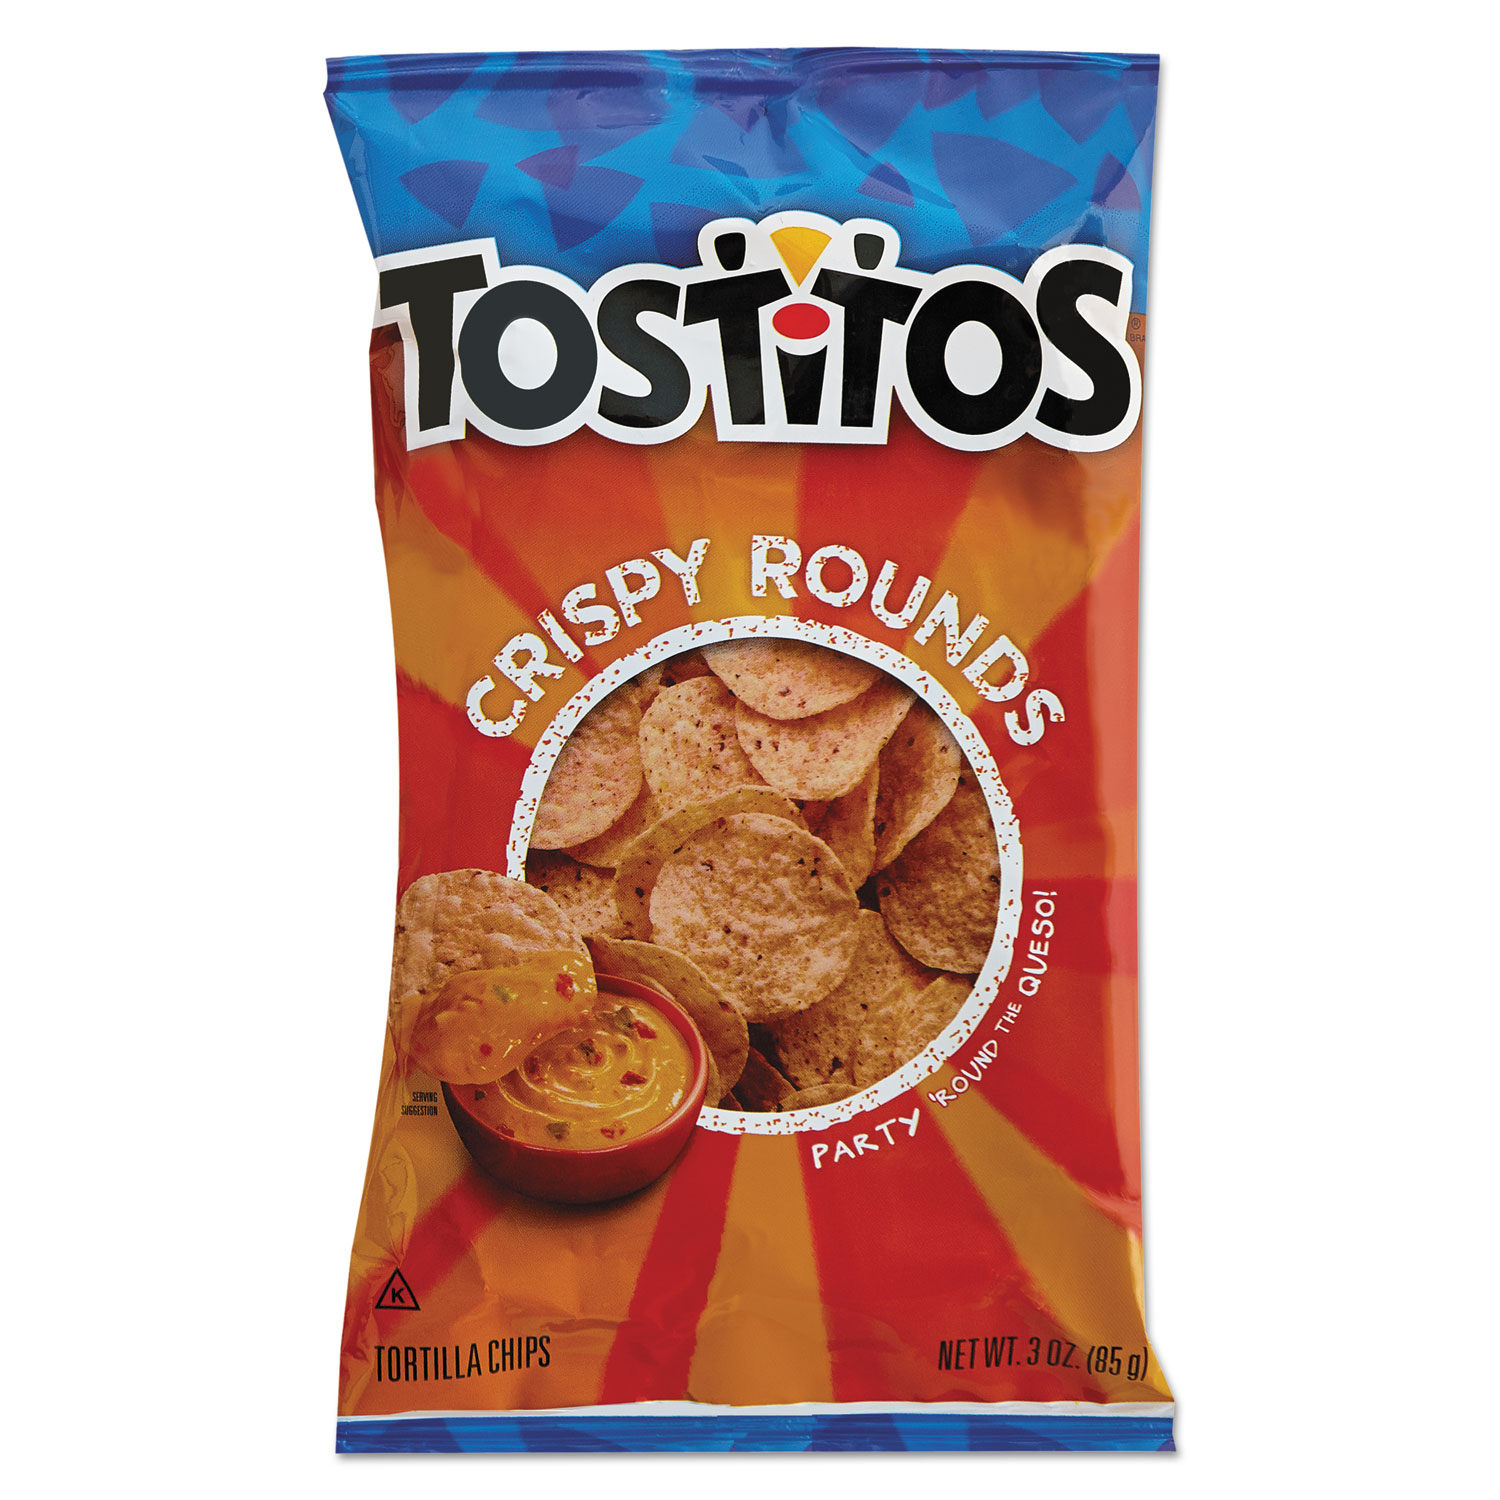  Tostitos 028400208710 Tortilla Chips Crispy Rounds, 3 oz Bag, 28/Carton (LAY20871) 